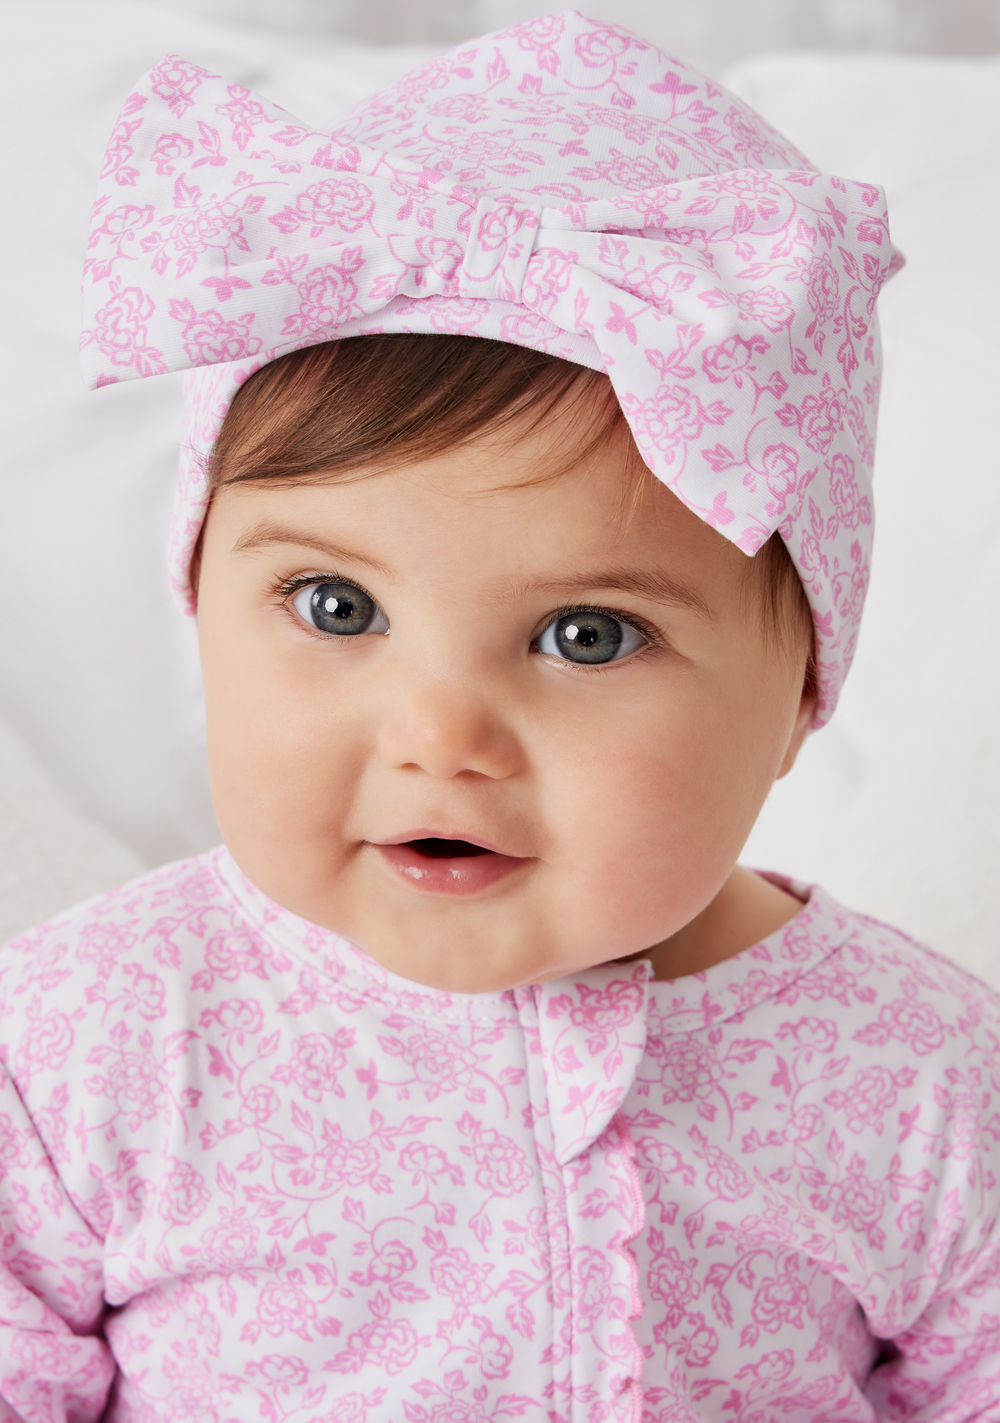 Baby Girl Pima Cotton Baby Clothes